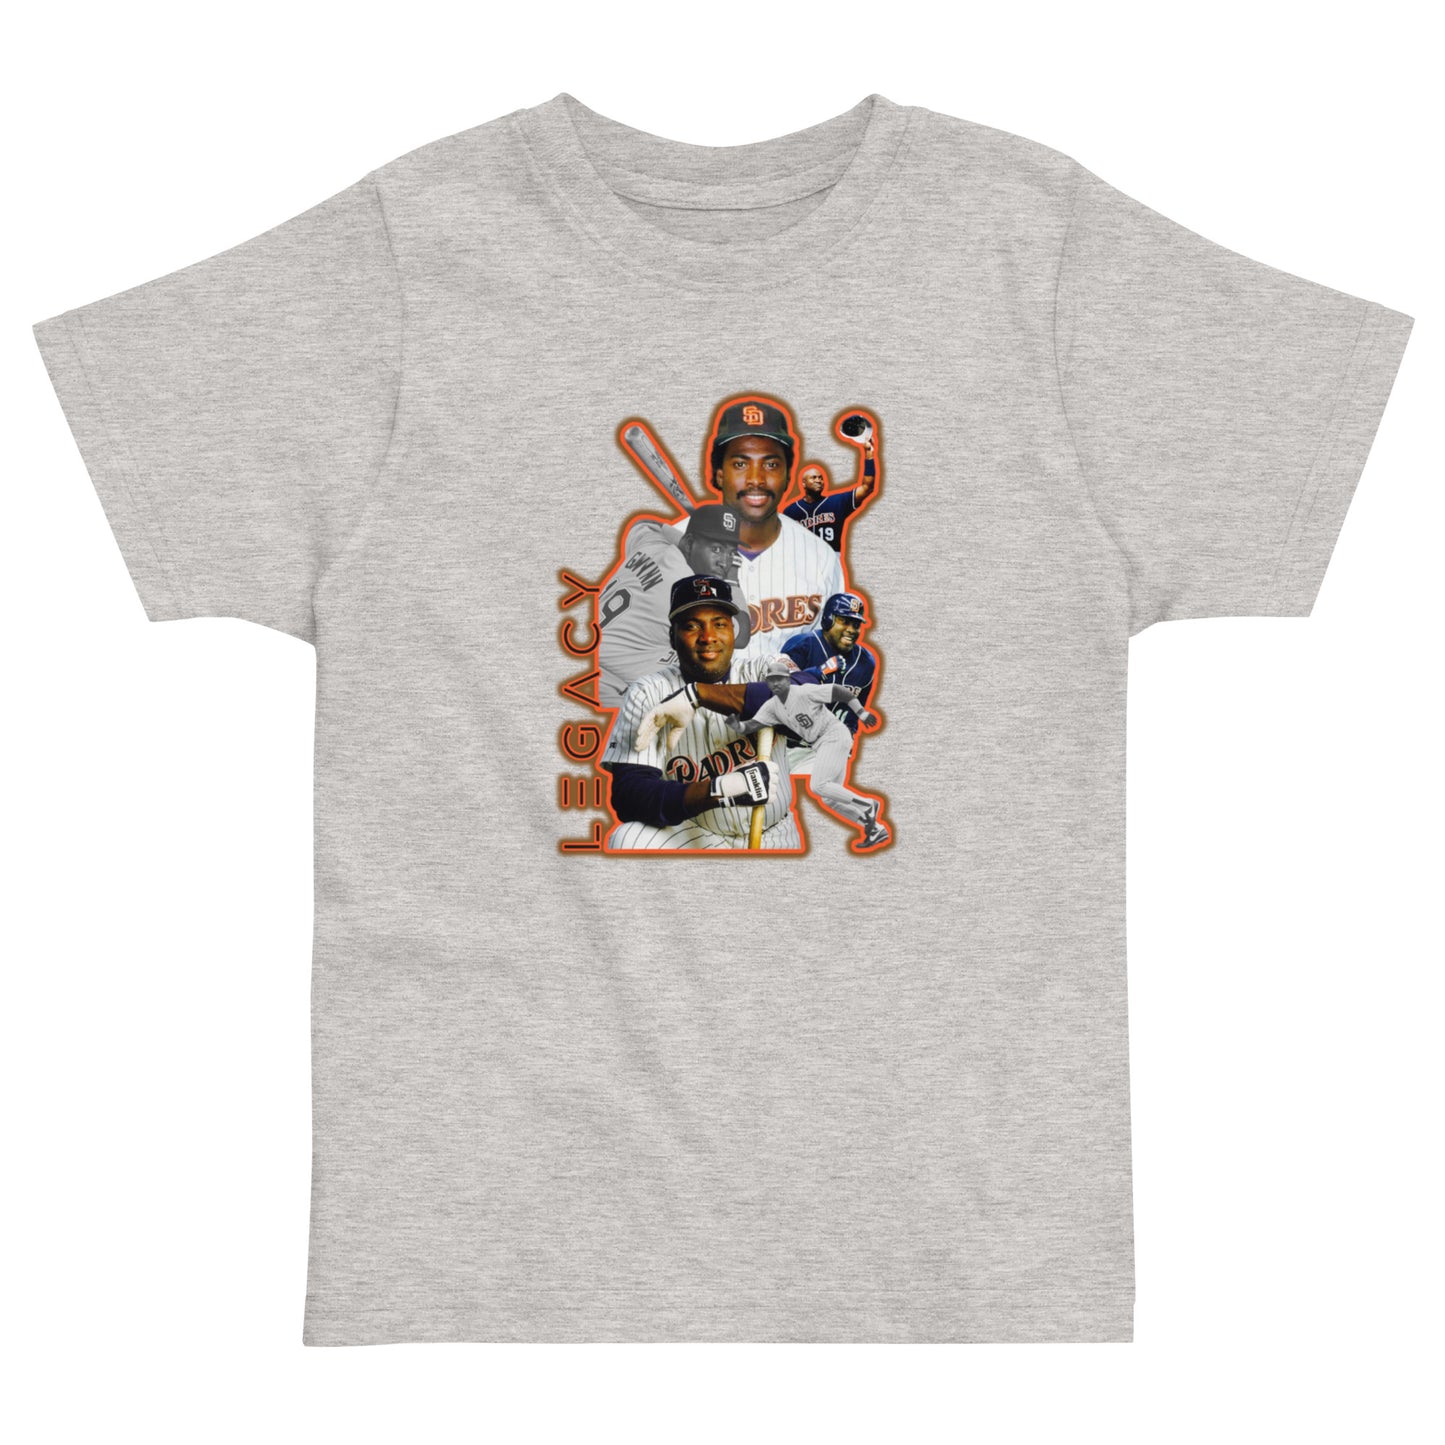 Toddler Legends "Mr. Padre" Champion T-Shirt